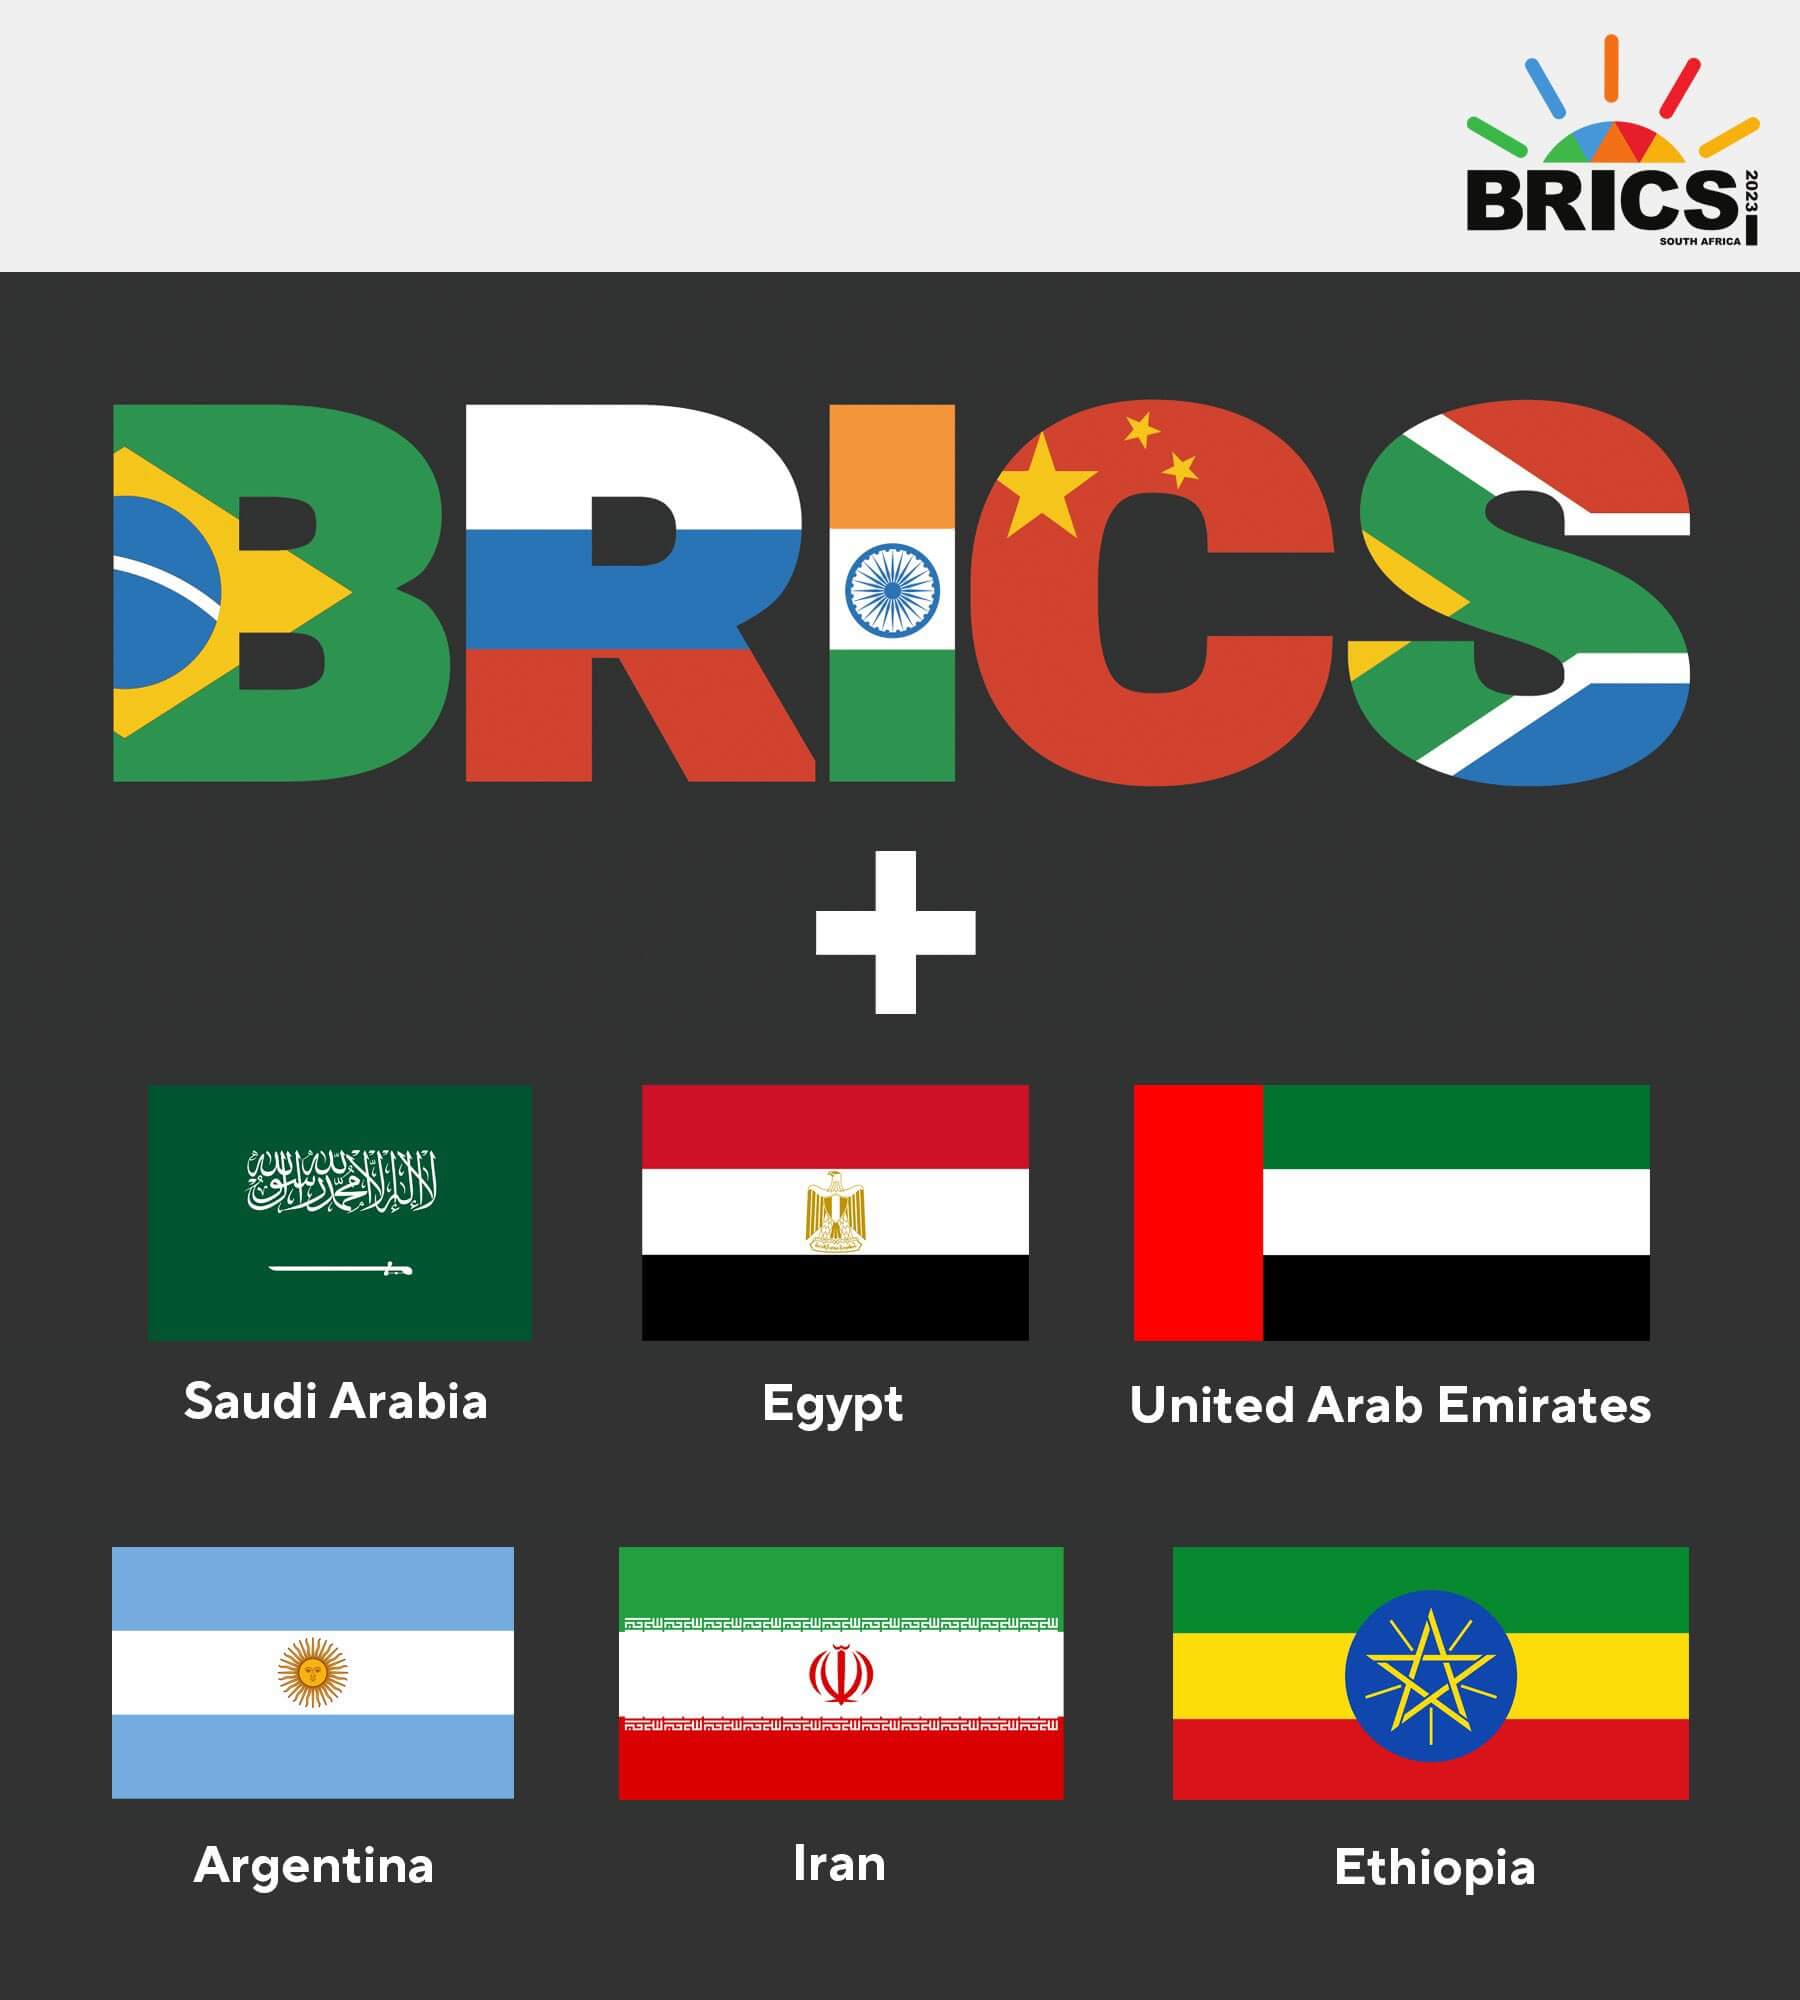 Saudi Arabia, UAE, Ethiopia, Iran, Egypt confirmed they are joining BRICS